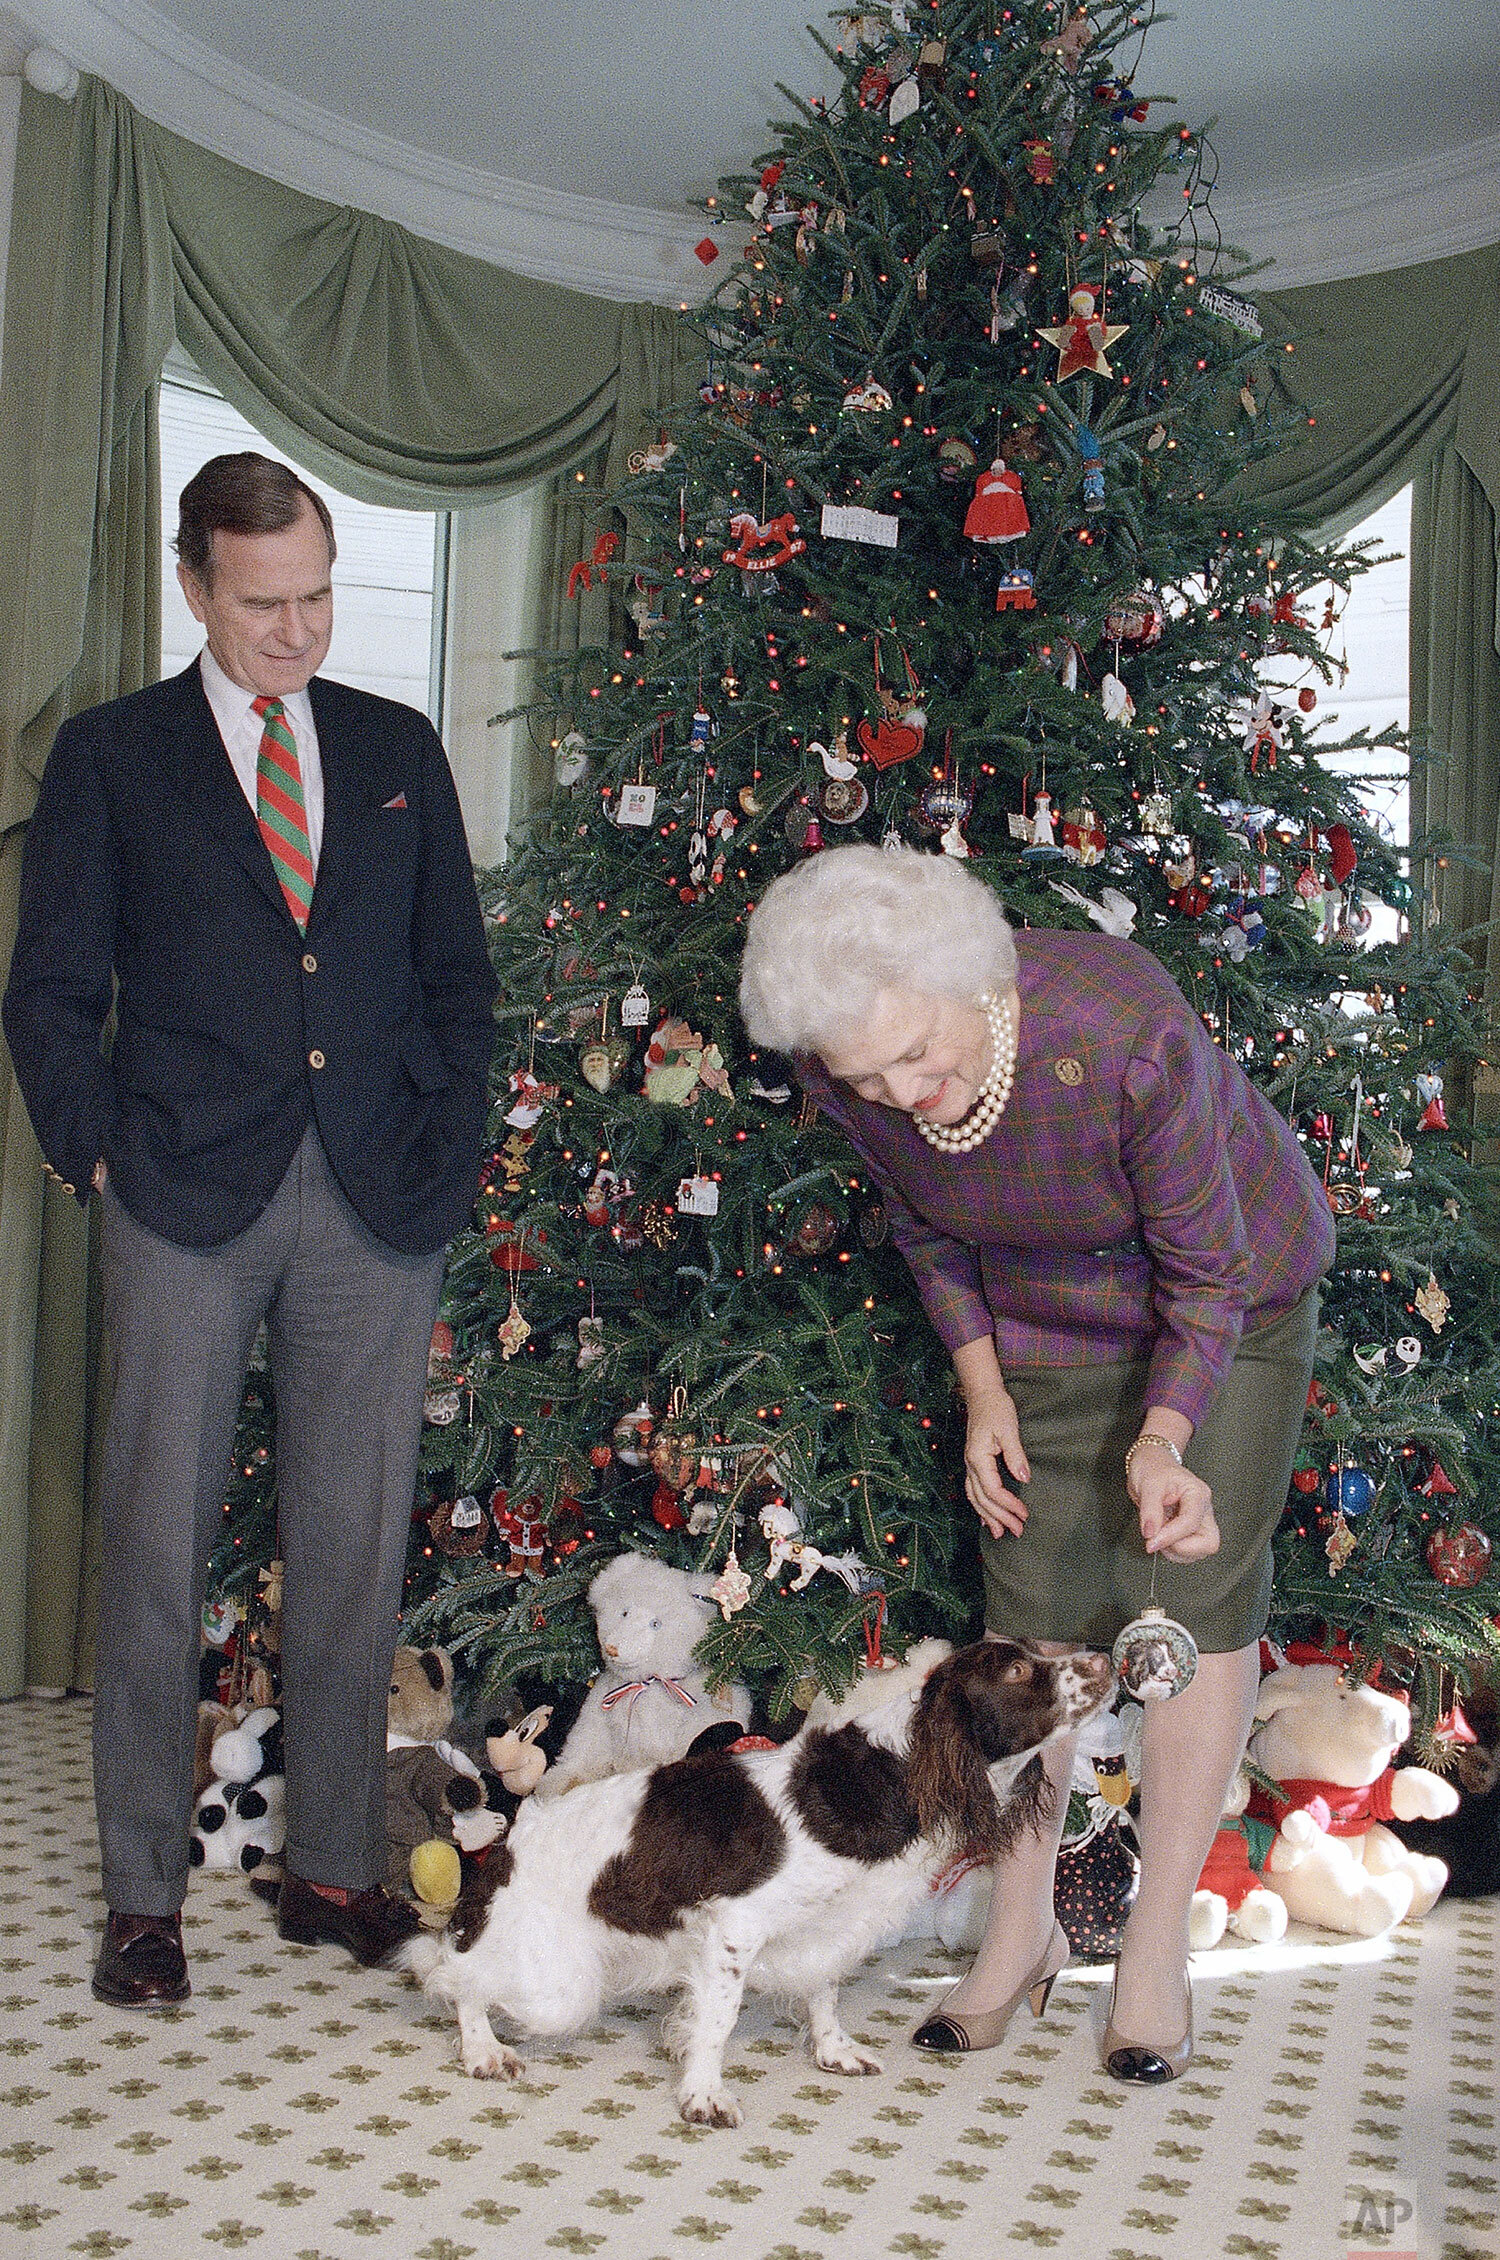  President-elect George Bush looks on as his wife Barbara decorates the Christmas tree at the Bush's Washington residence, Dec. 11, 1988. (AP Photo/Ron Edmonds) 